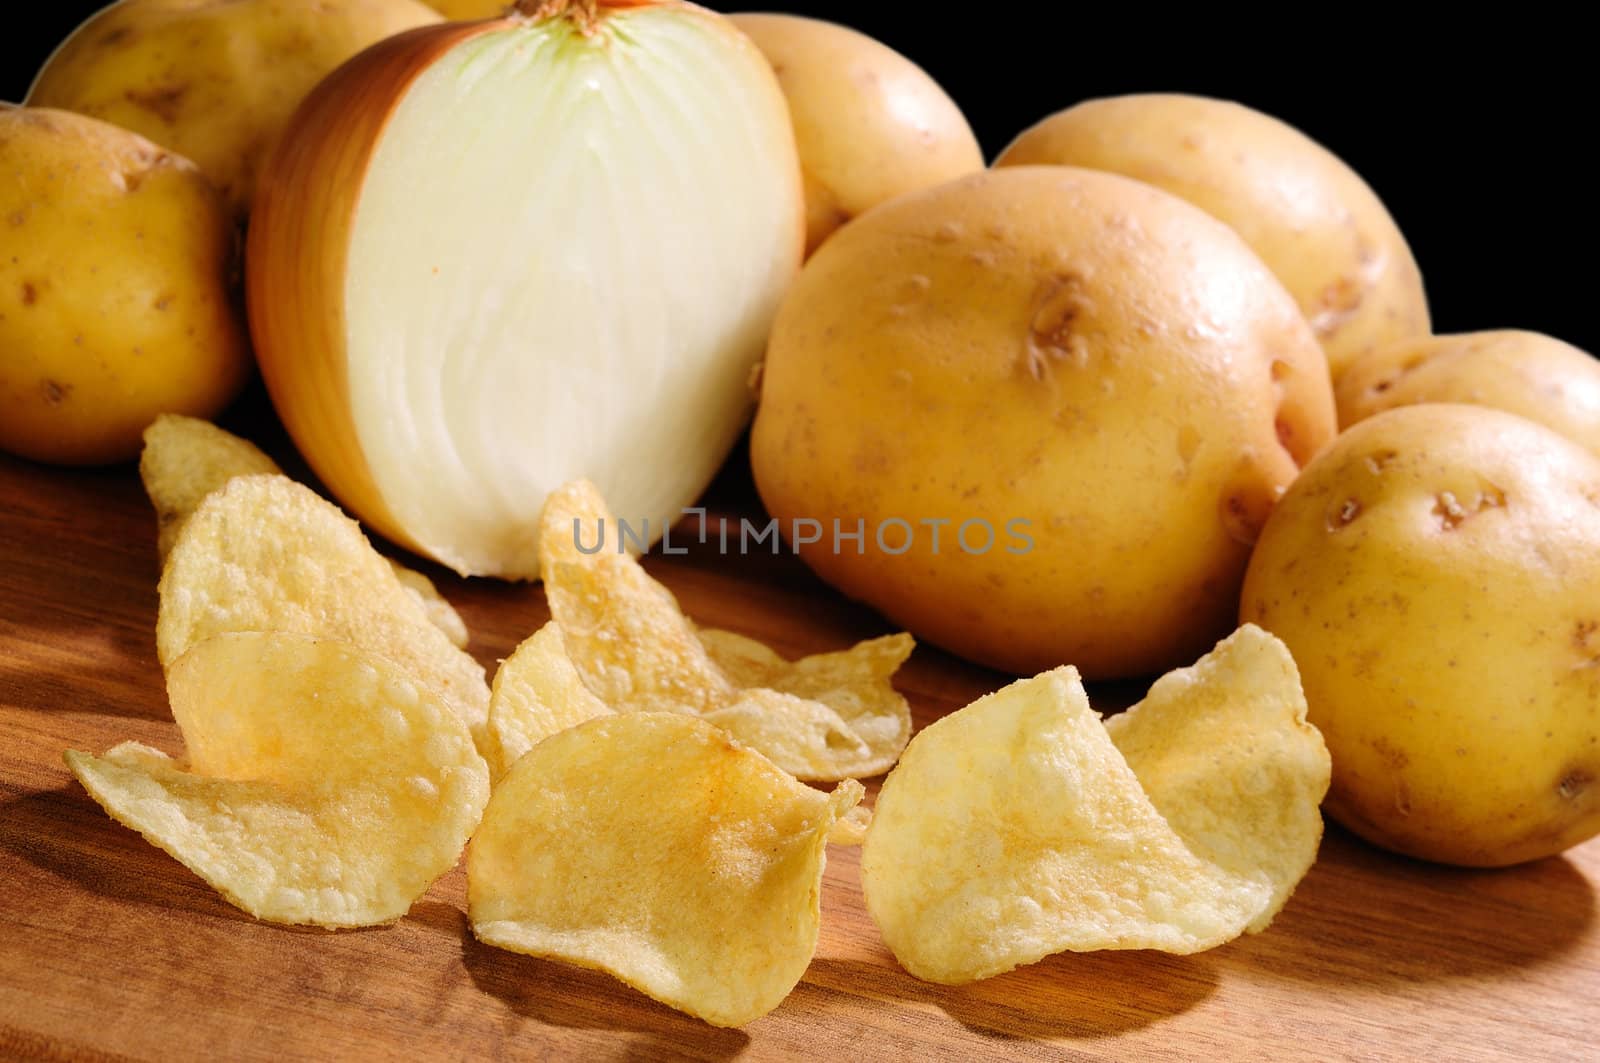 Maui onion flavor potato chips by neelsky